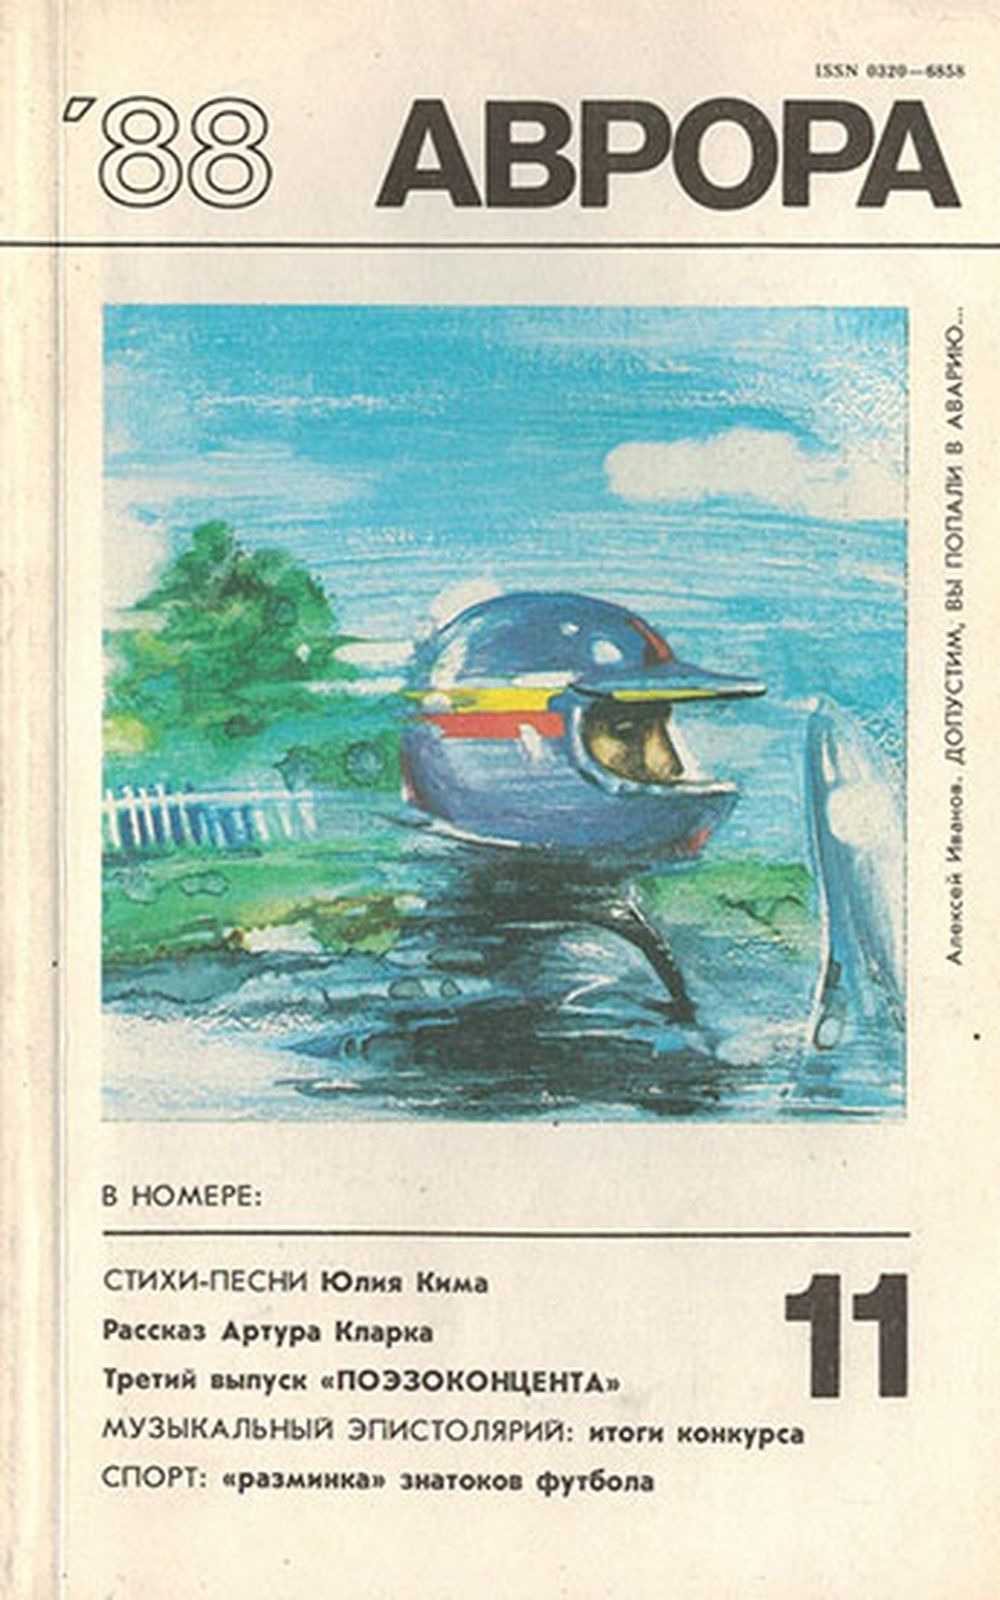 фото Журнал "Аврора". № 11, 1988 г.